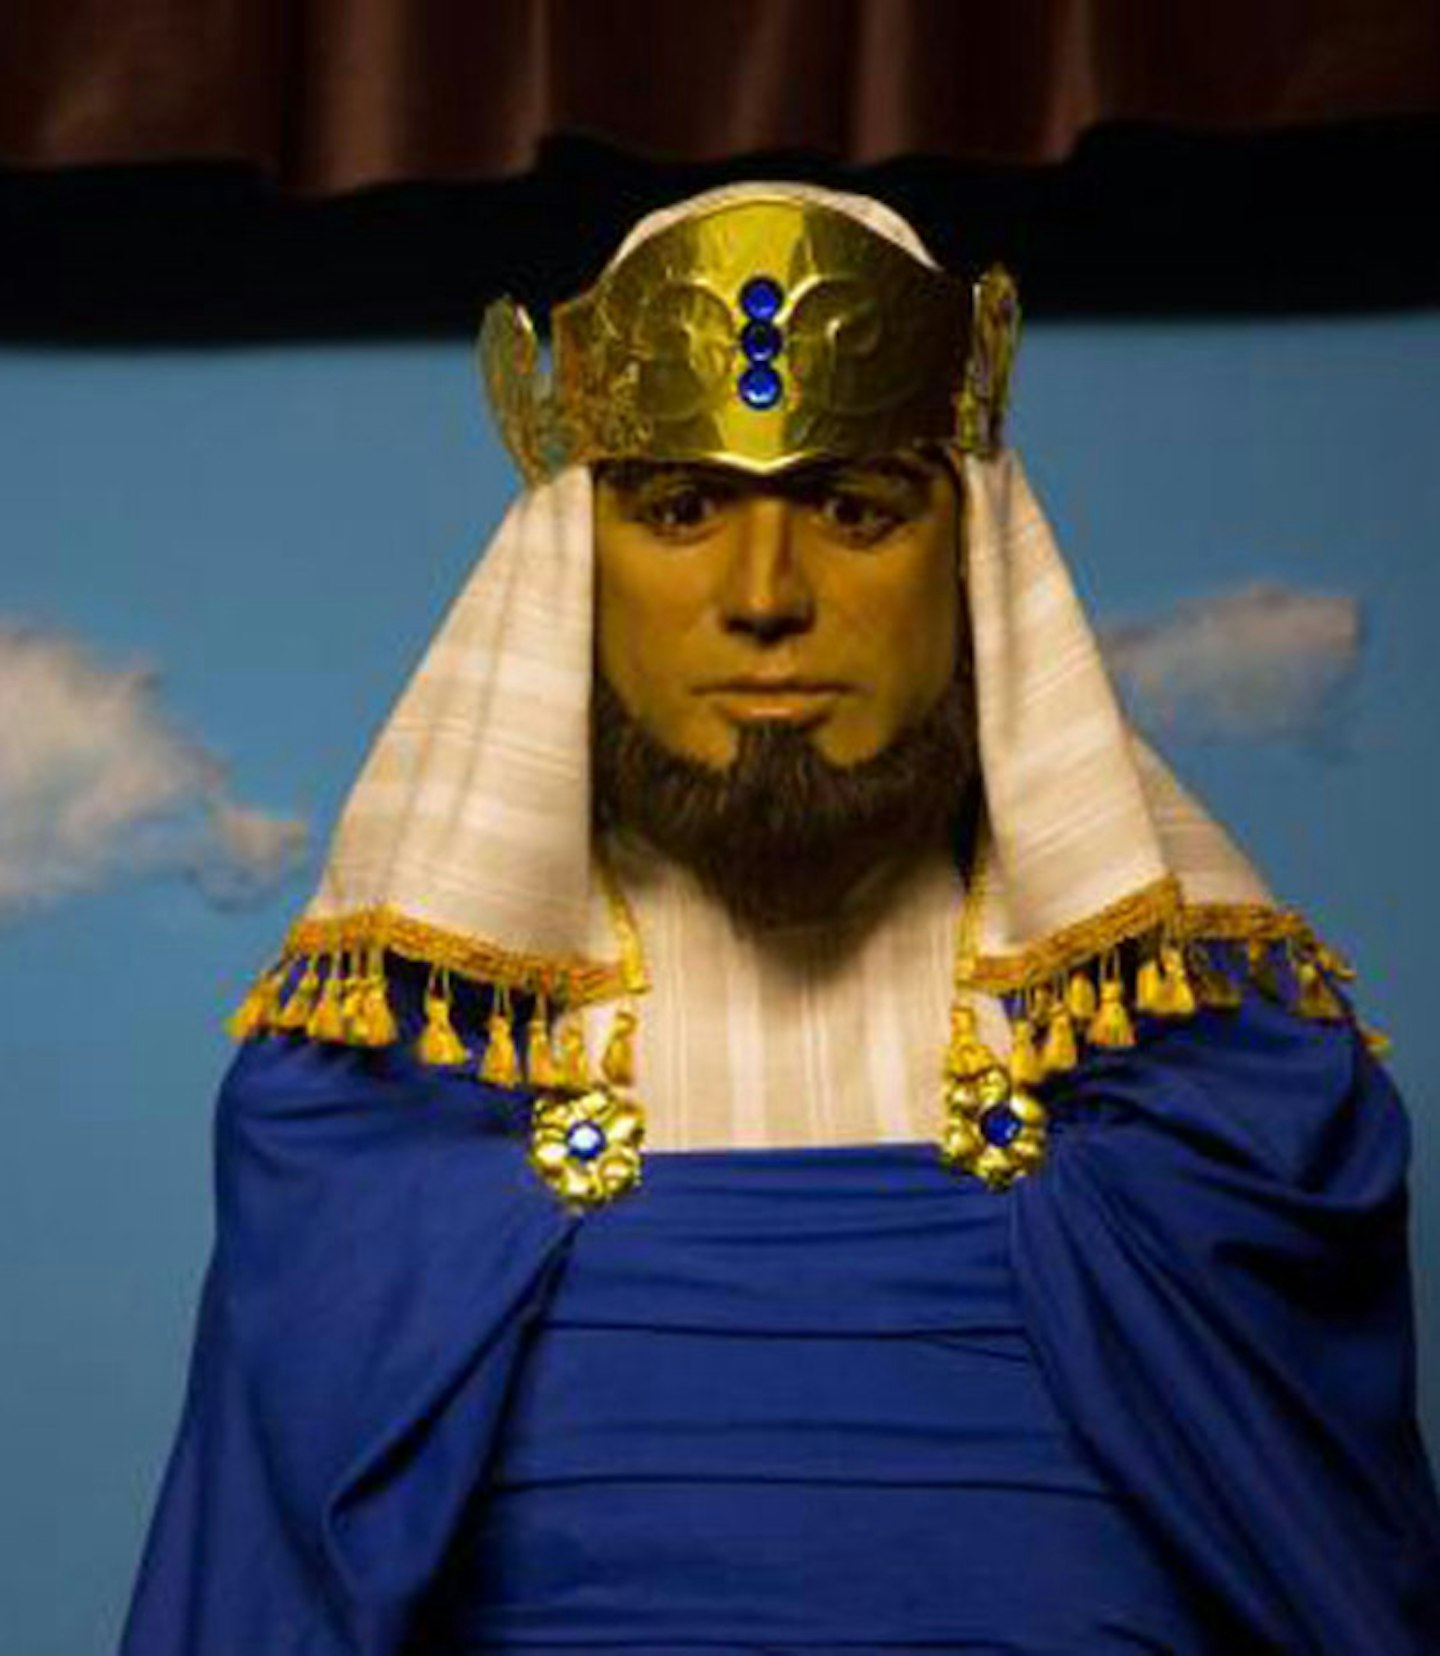 John Travolta as King Solomon